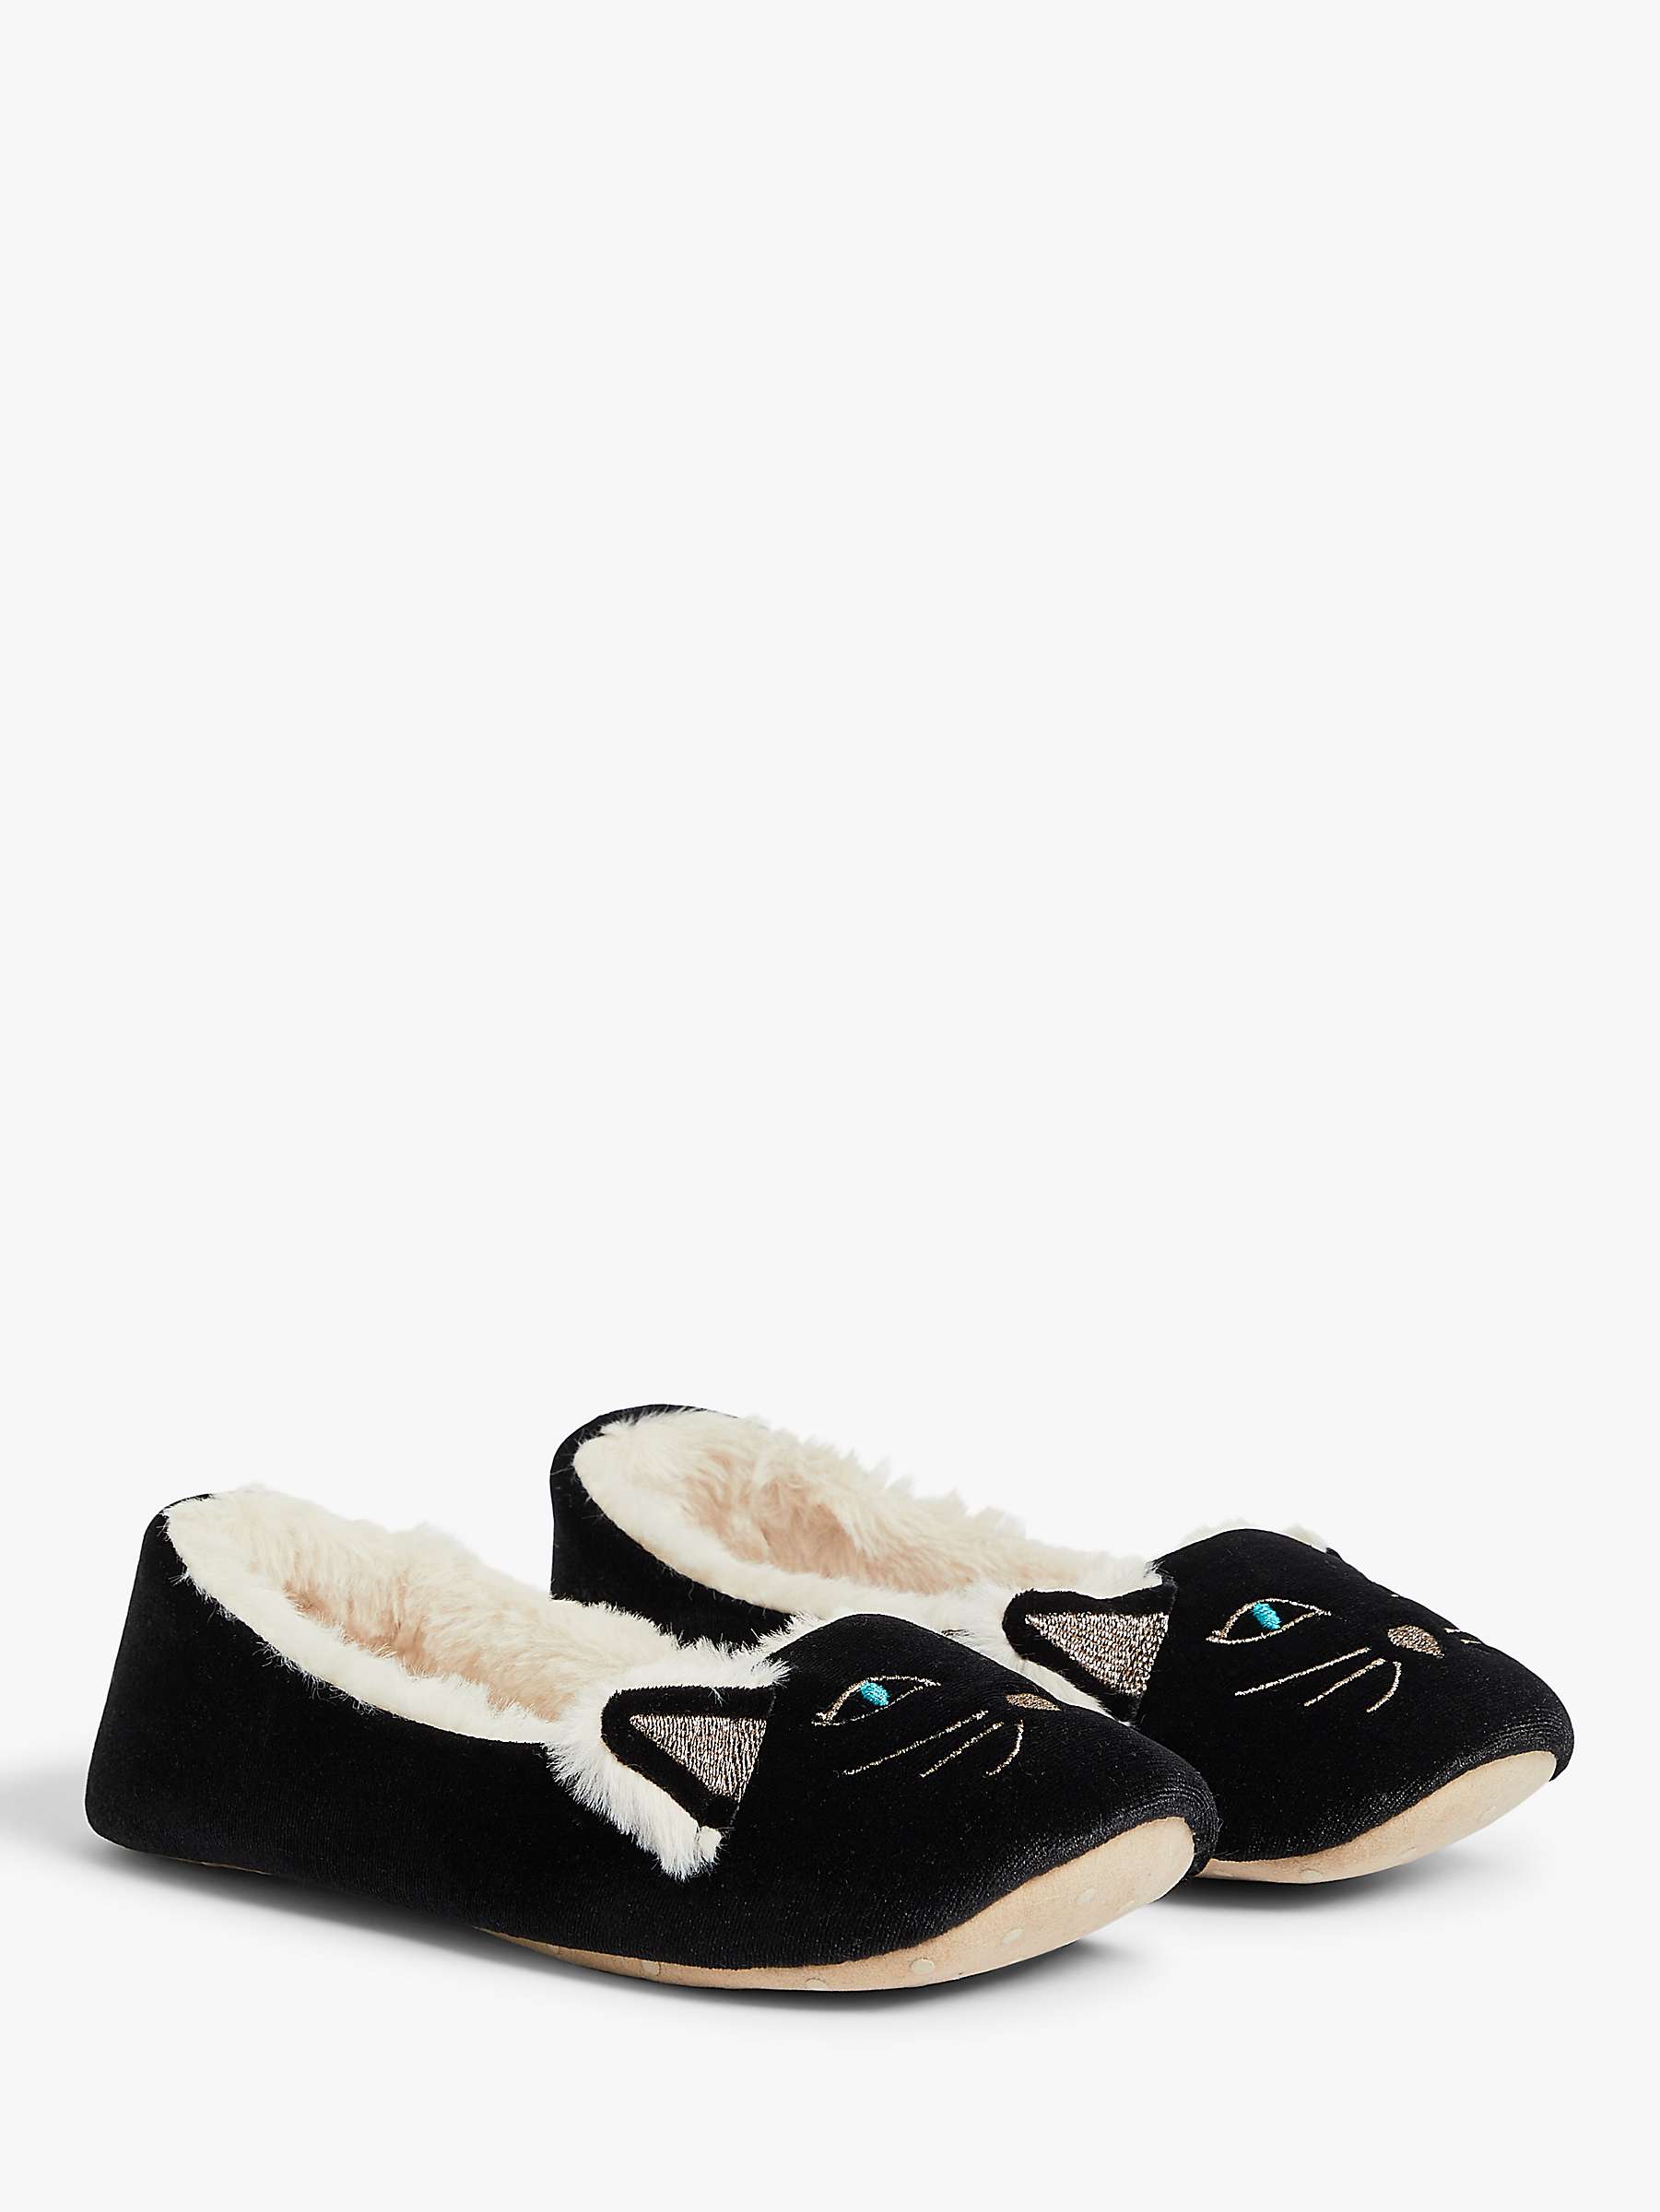 Buy John Lewis Cat Ballerina Slippers, Black Online at johnlewis.com